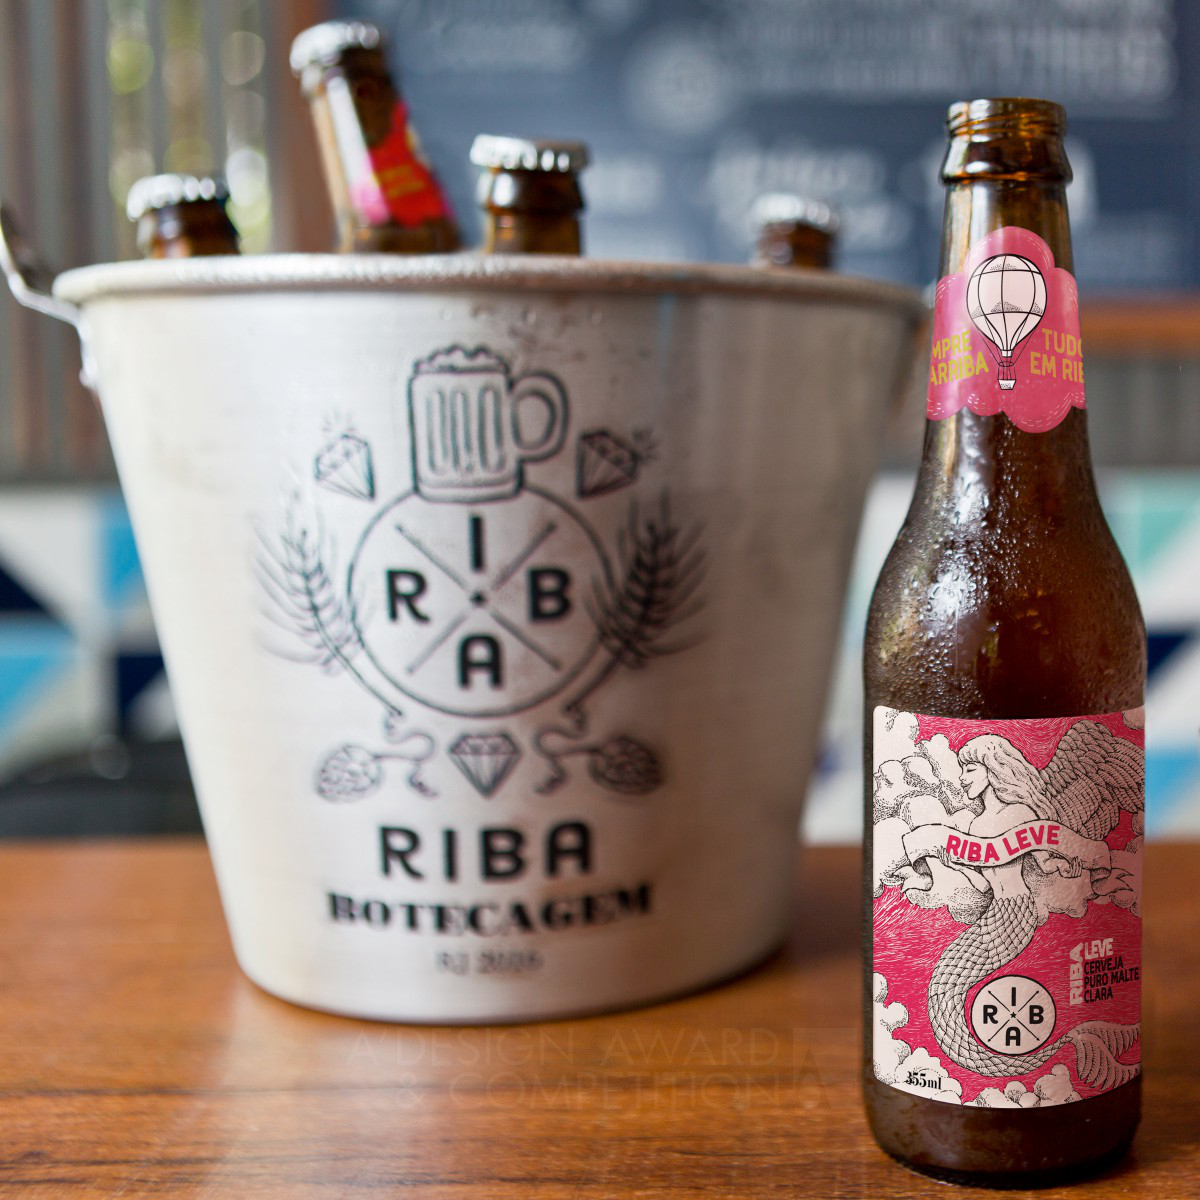 Riba Leve Light Beer Label by Ruis Vargas